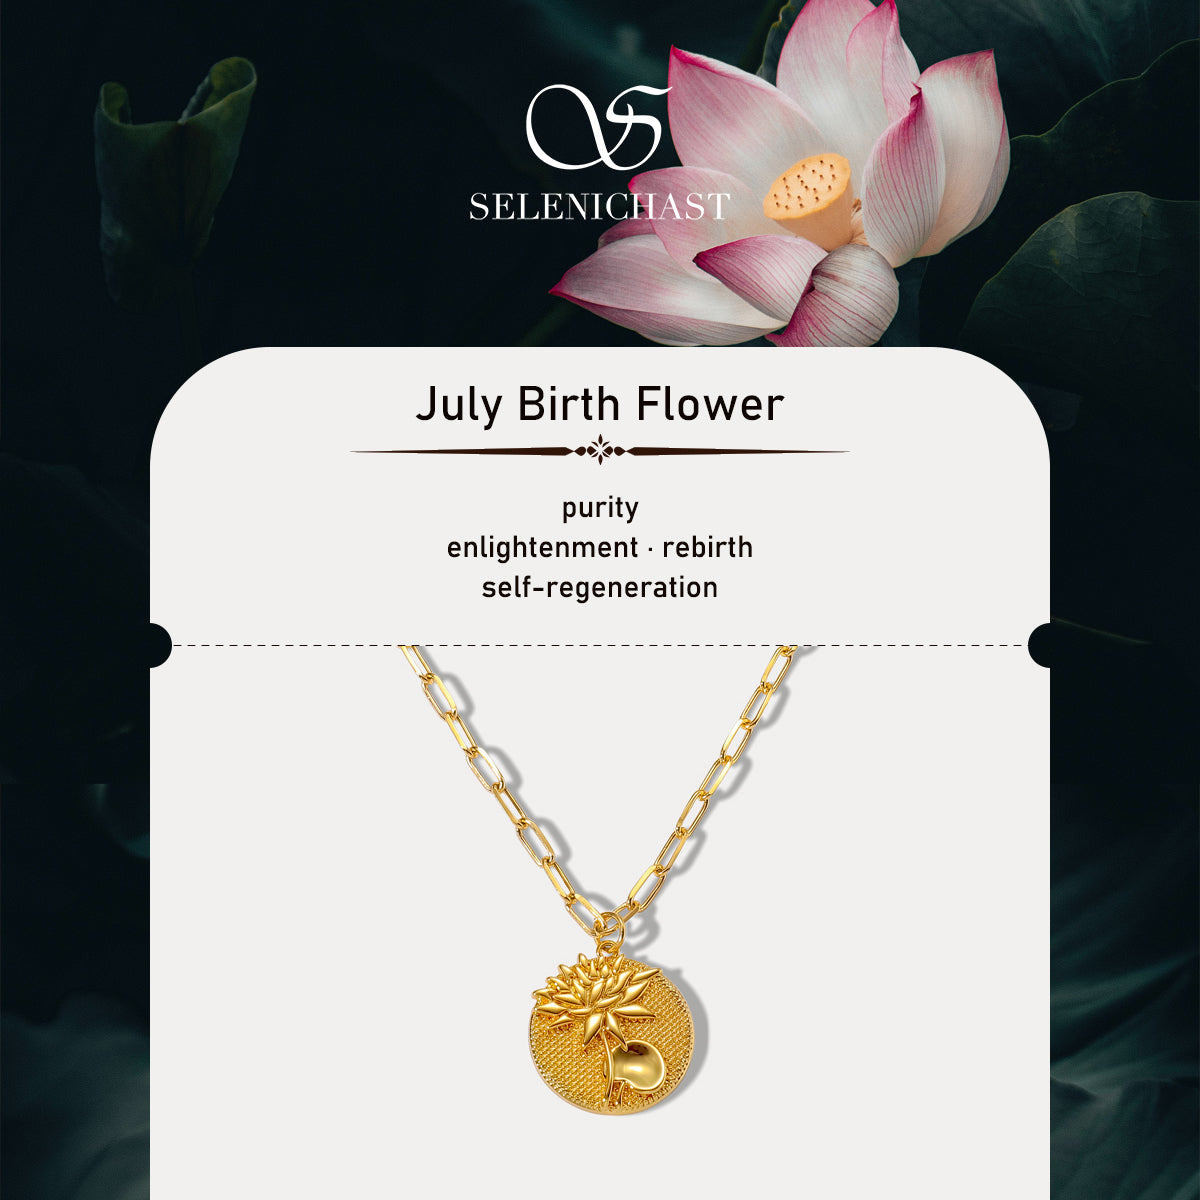 enlightenment floral pendant lotus necklace july